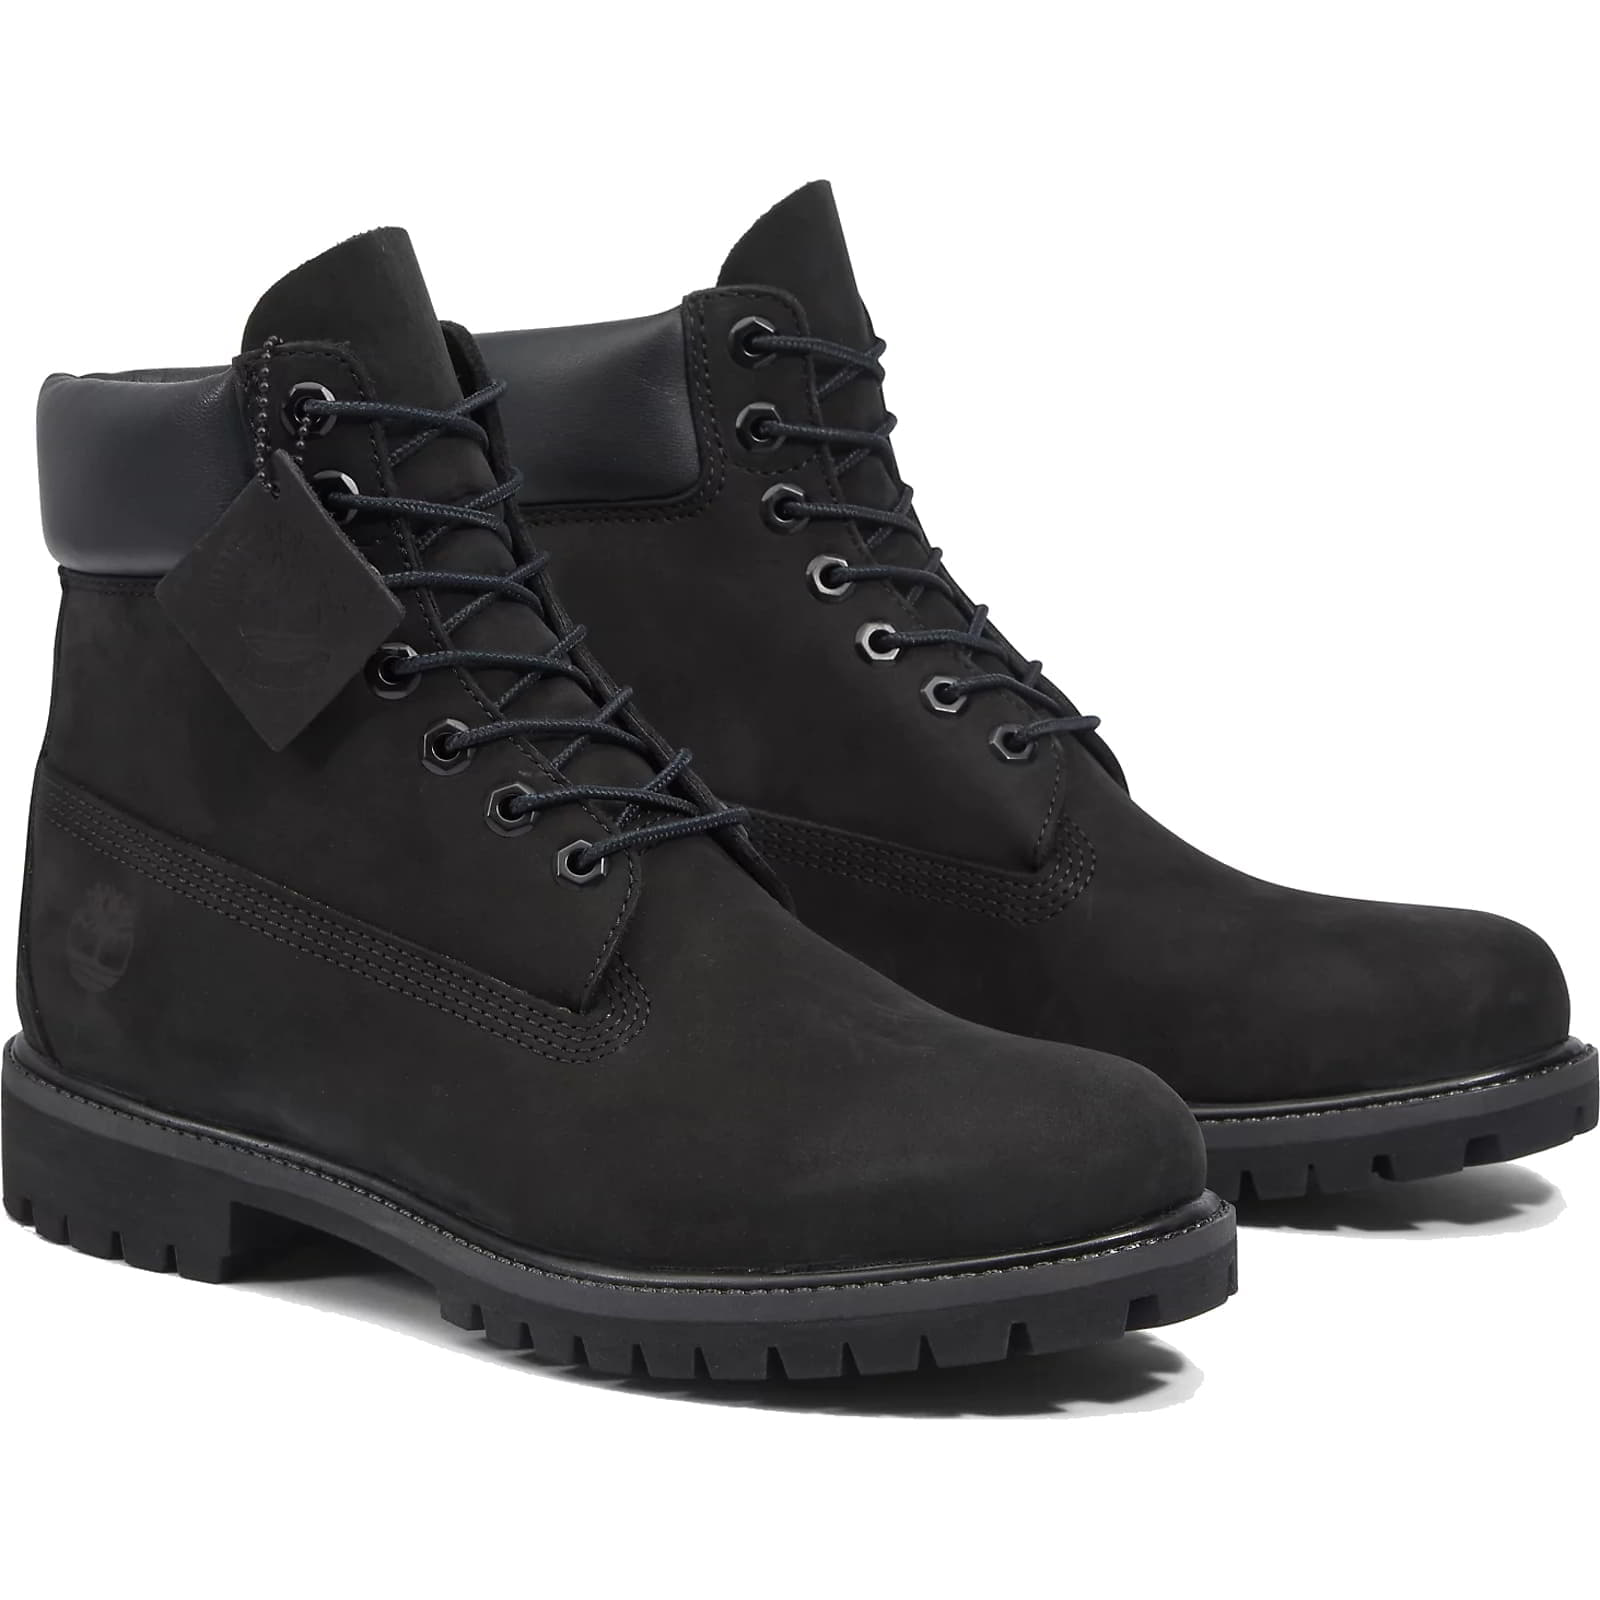 Timberland Men's 6 Inch Premium Black Classic Wide Fit Waterproof Boots - UK 8.5